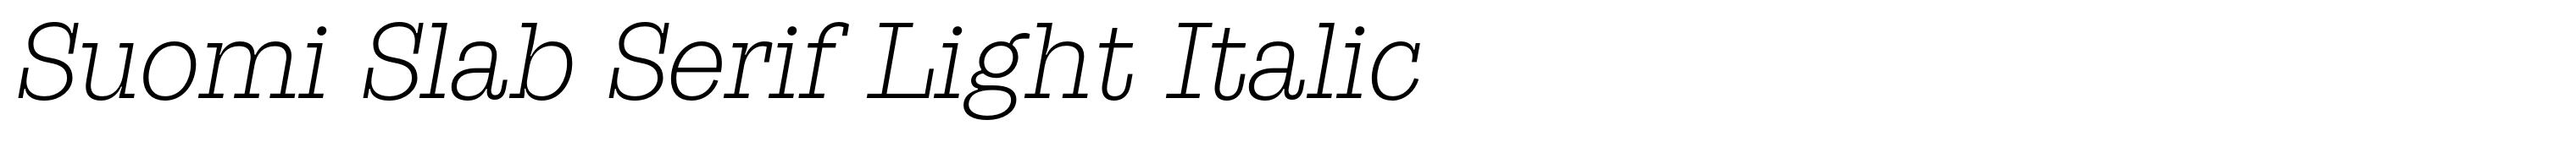 Suomi Slab Serif Light Italic